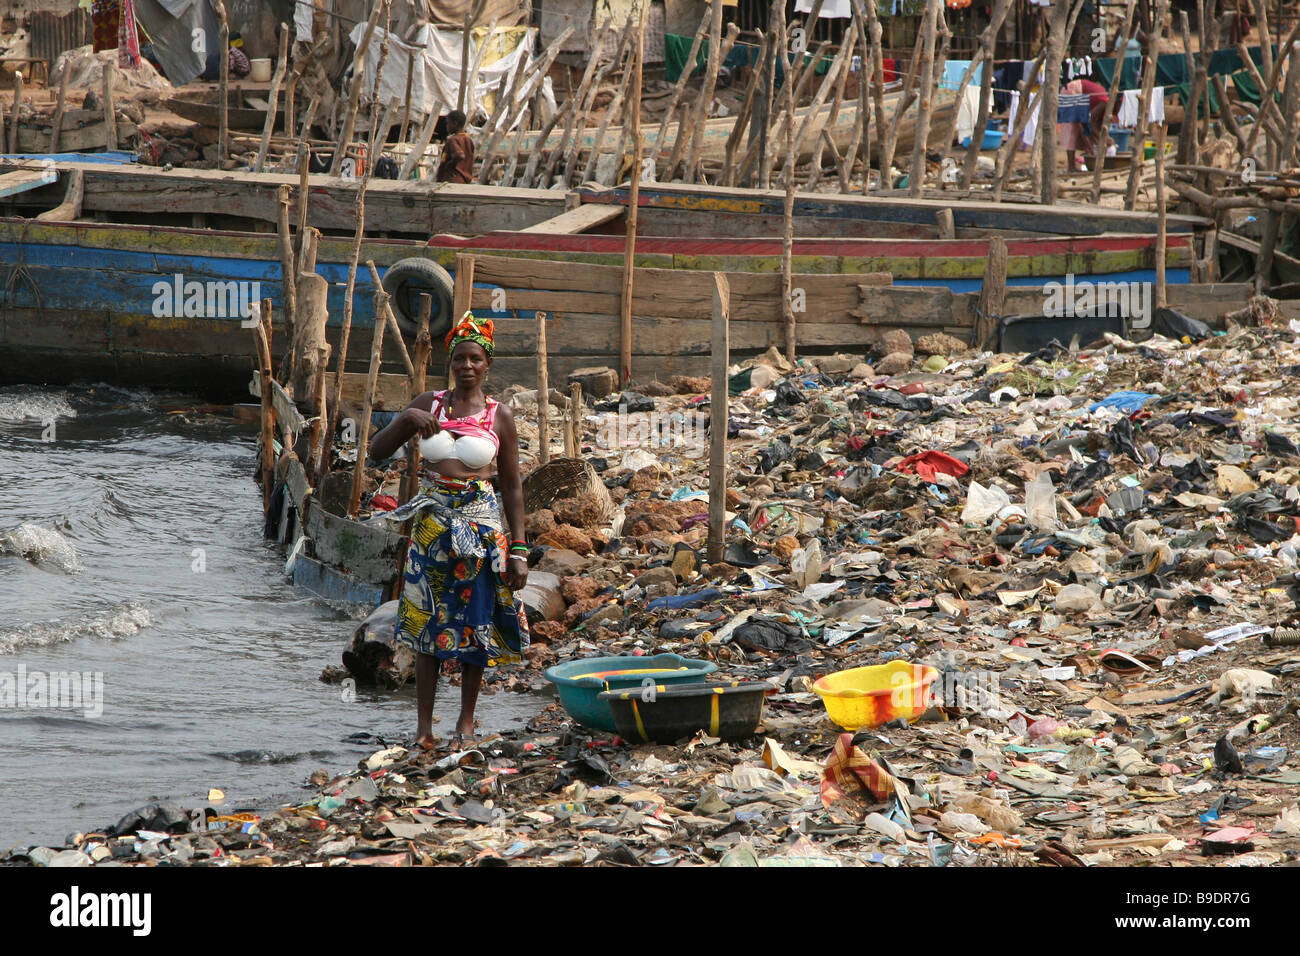 Woman between garbage, in the slums of Freetown Sierra Leone Stock Photo